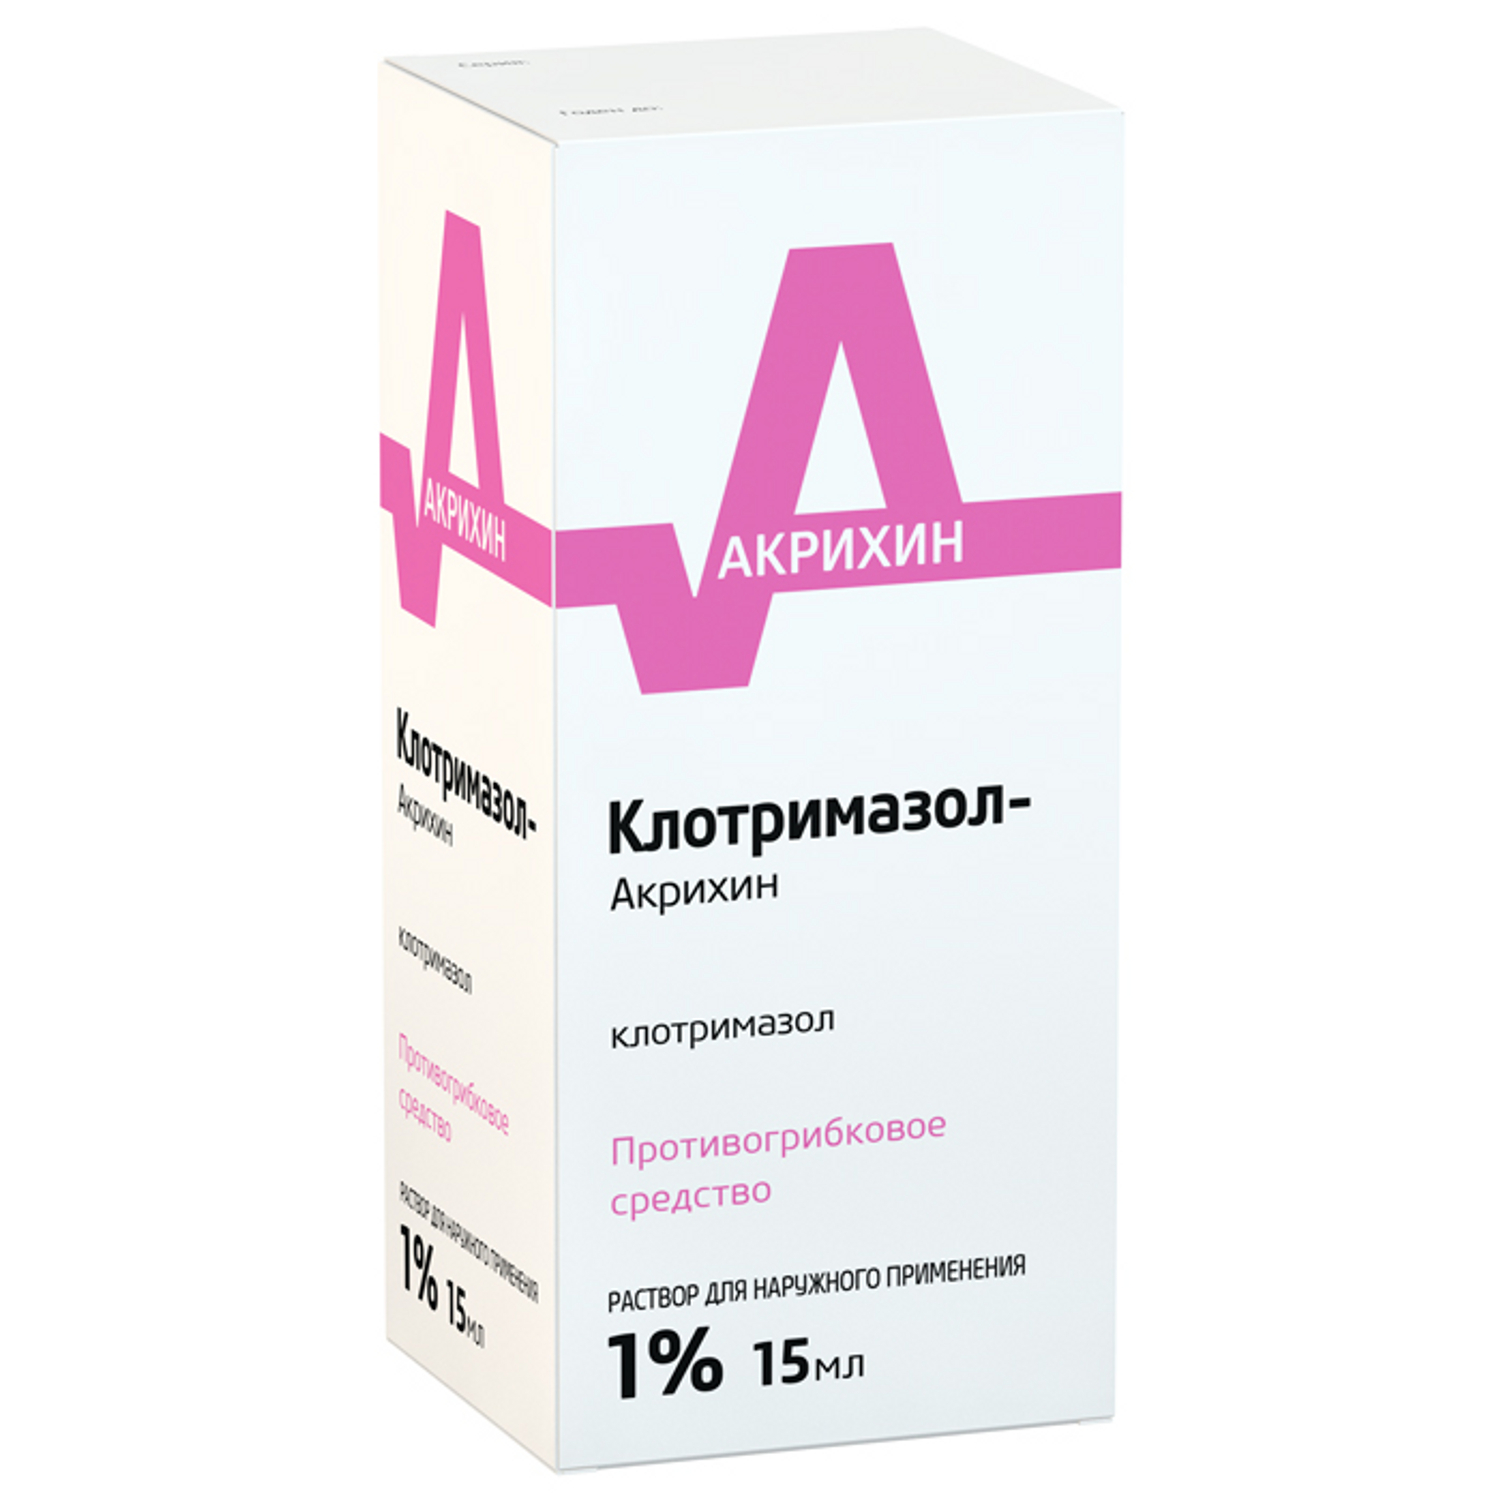 Клотримазол-Акрихин р-р 1% 15мл